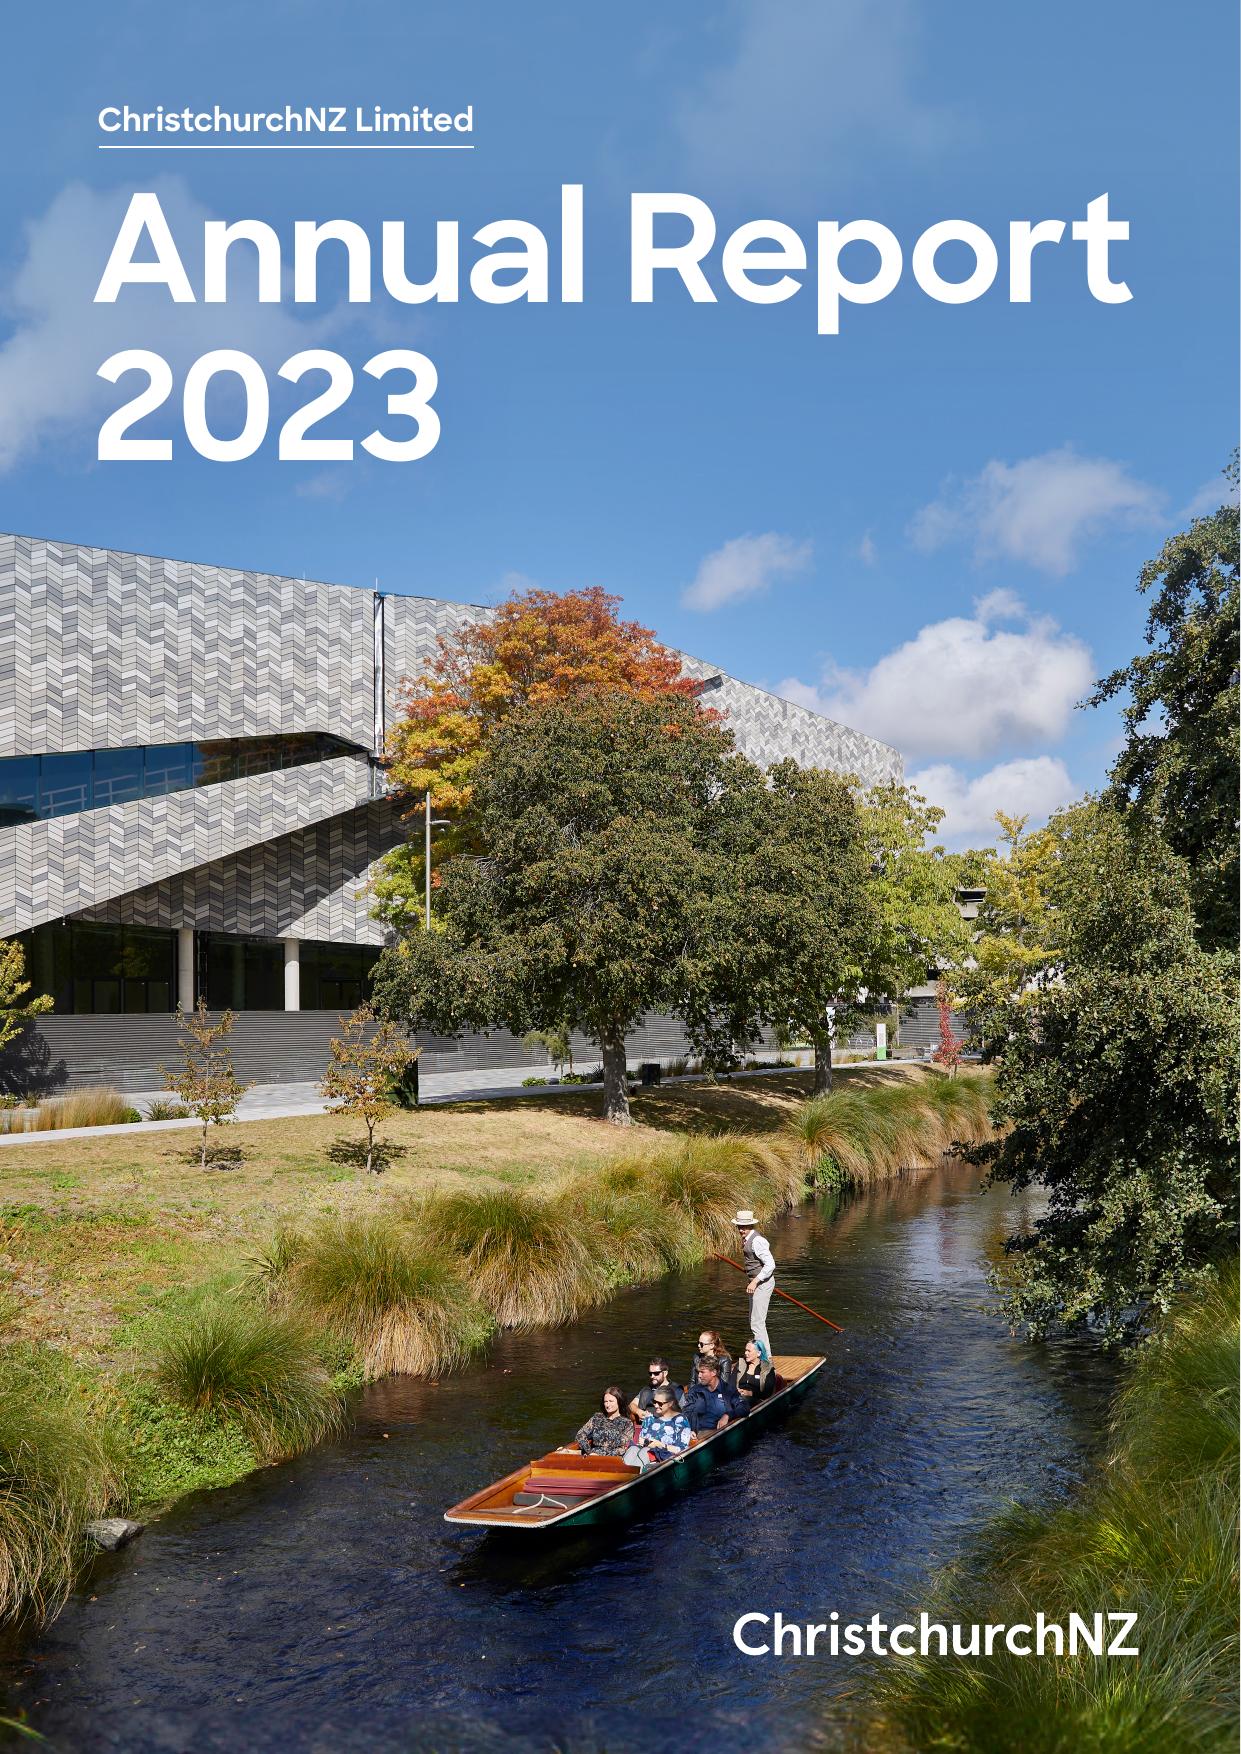 CHRISTCHURCHNZ 2023 Annual Report